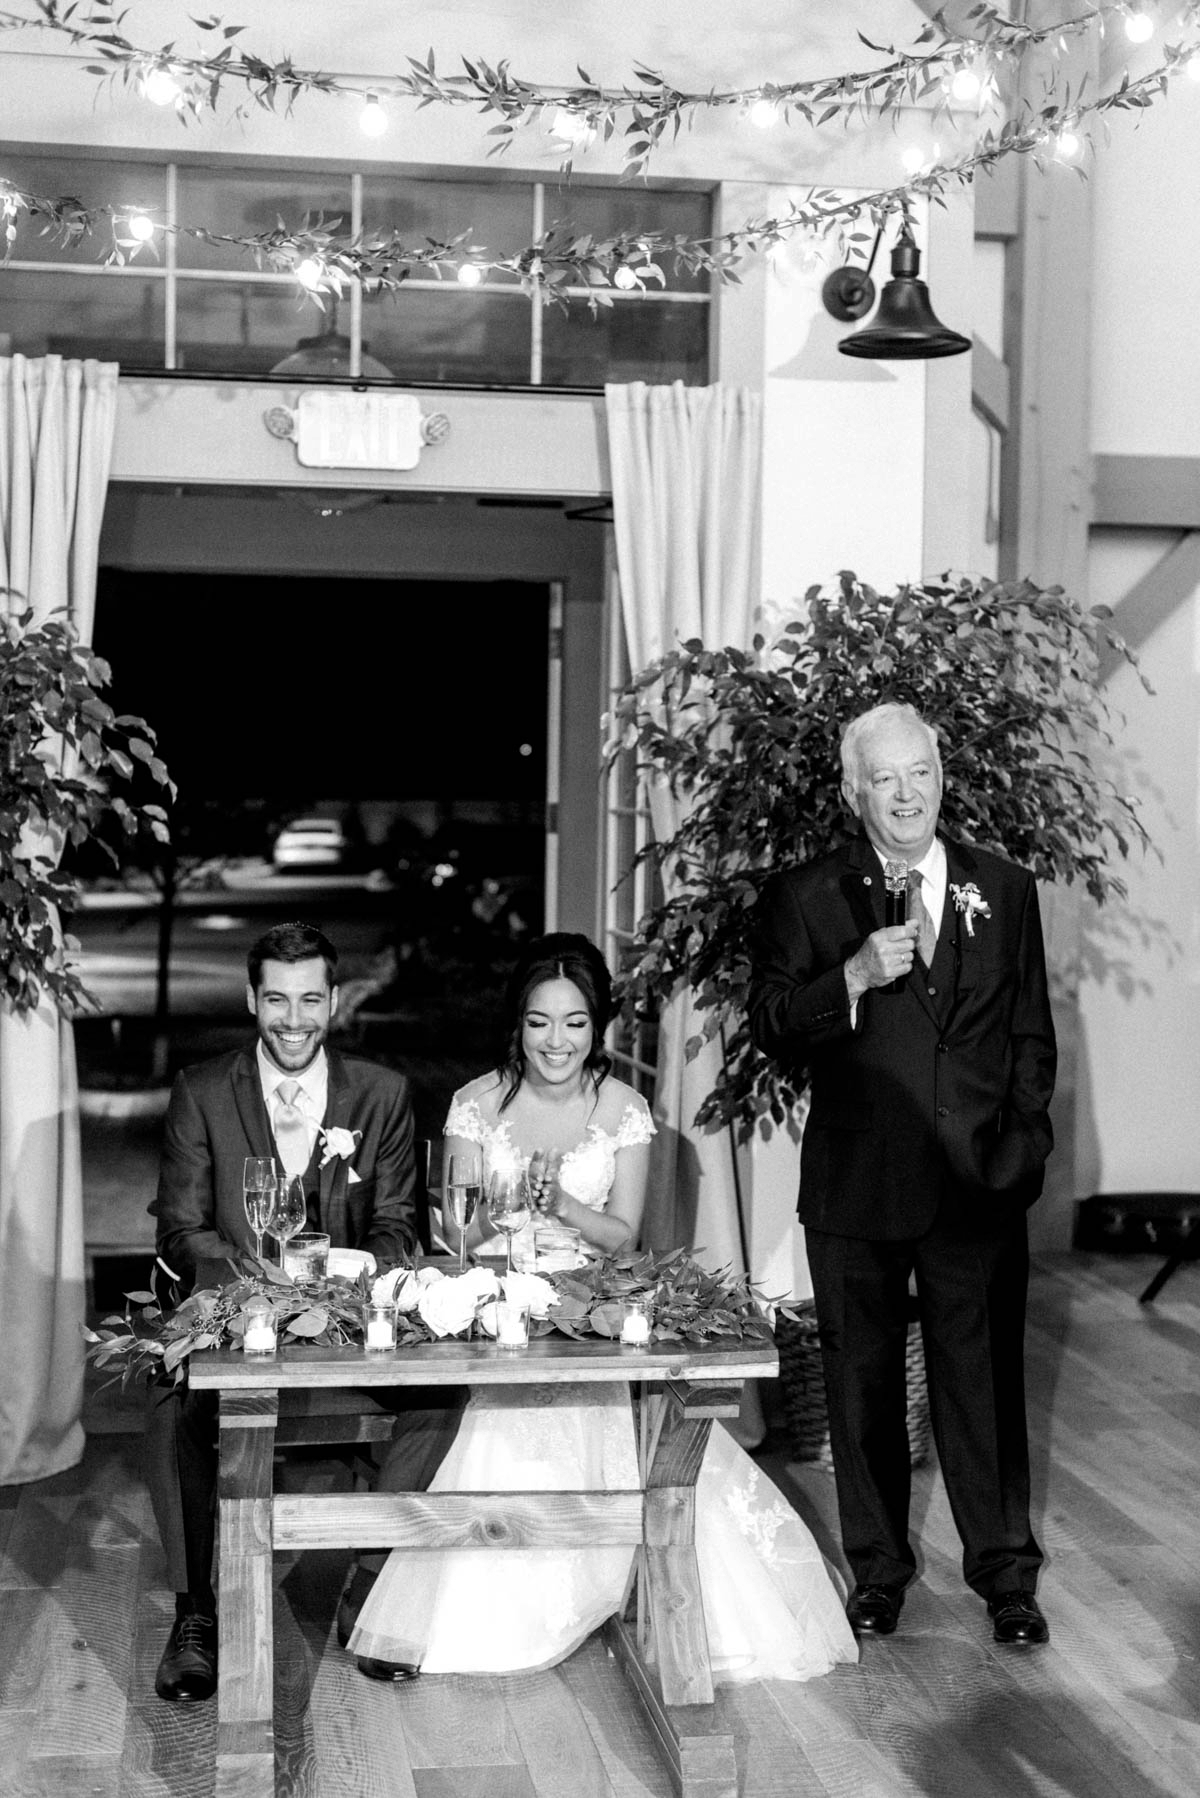 Romantic September Wedding at Briar Barn Inn in Rowley, Massachusetts captured by Boston Wedding Photographer Annmarie Swift